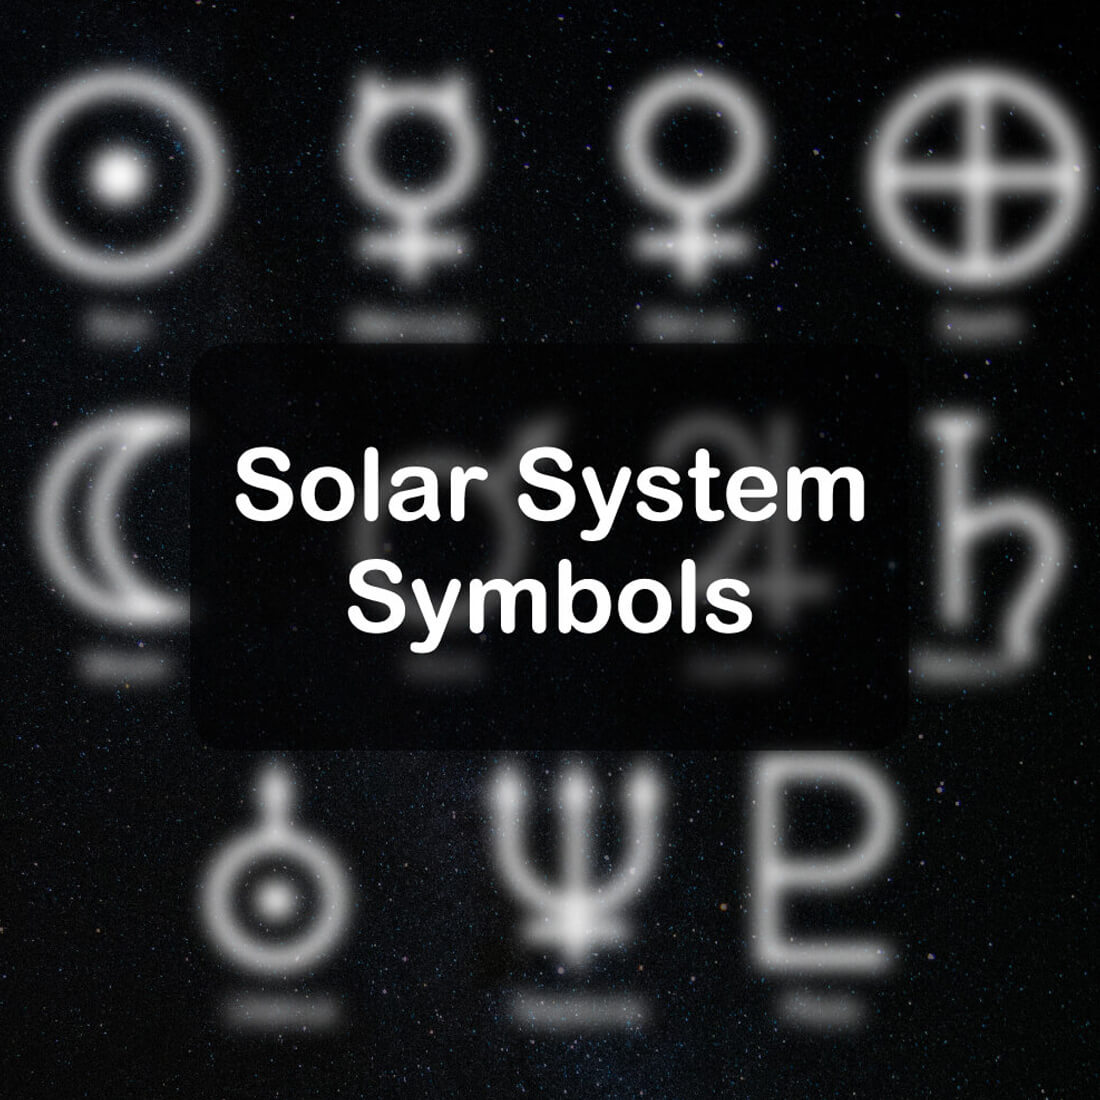 Bundle of Solar System Symbols cover image.